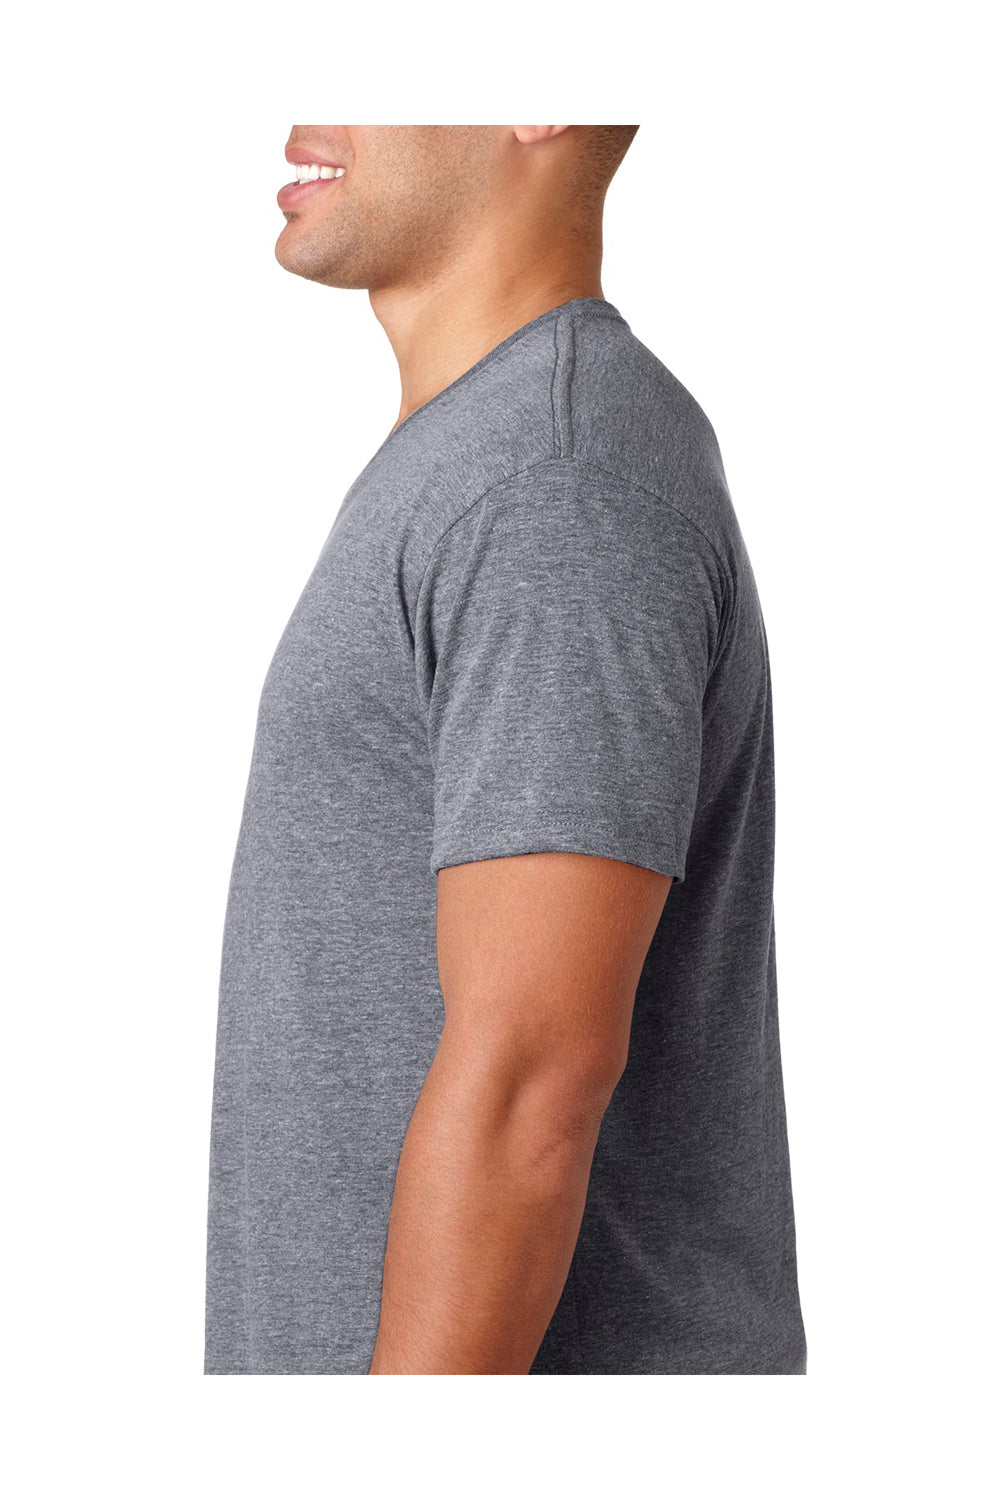 Next Level 6040 Mens Jersey Short Sleeve V-Neck T-Shirt Heather Grey Side